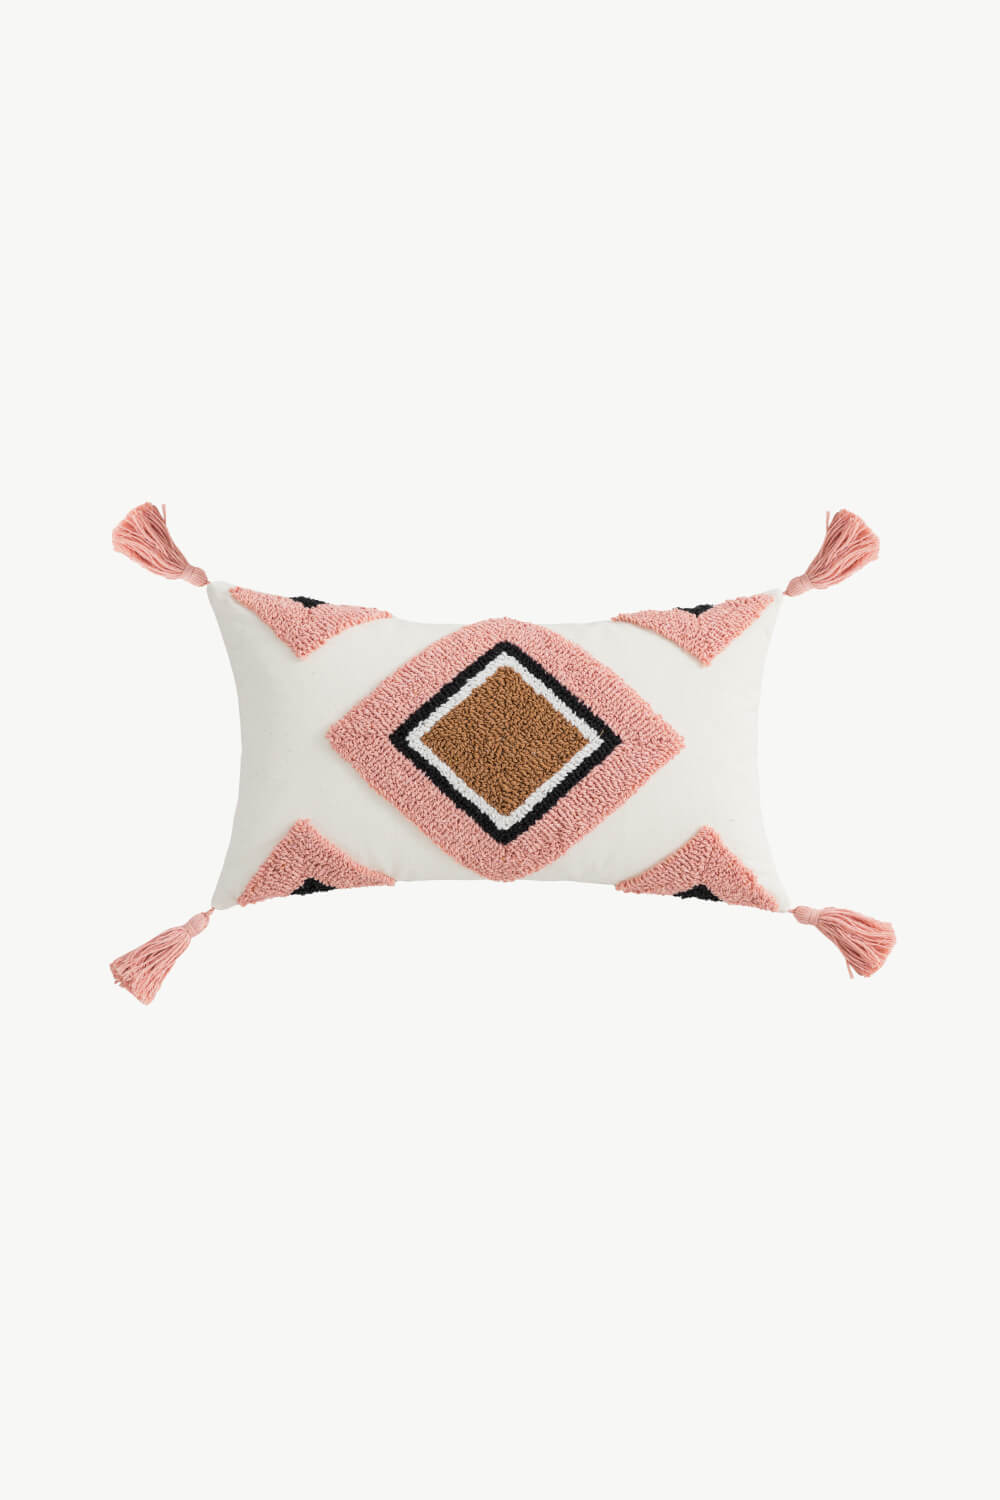 Geometric Graphic Tassel Decorative Throw Pillow Case COCO CRESS